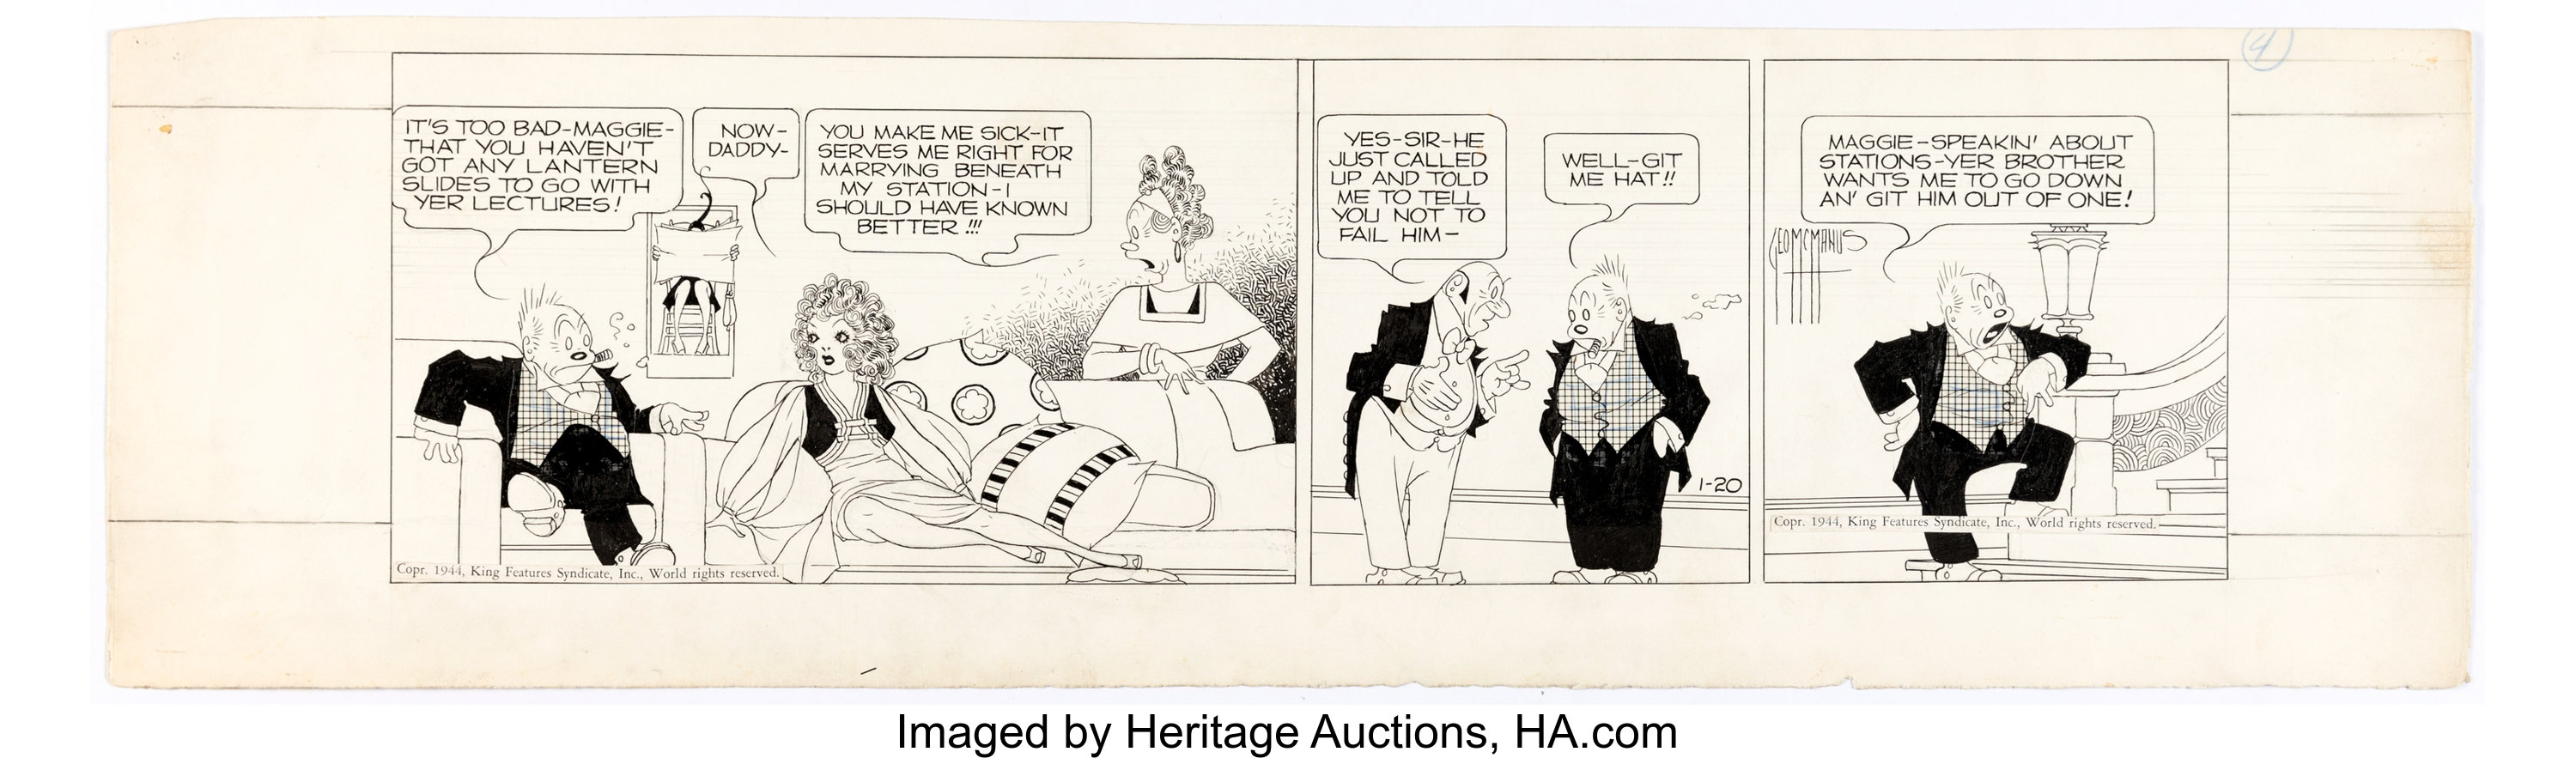 George Mcmanus Bringing Up Father Daily Comic Strip Original Art Lot 11152 Heritage Auctions